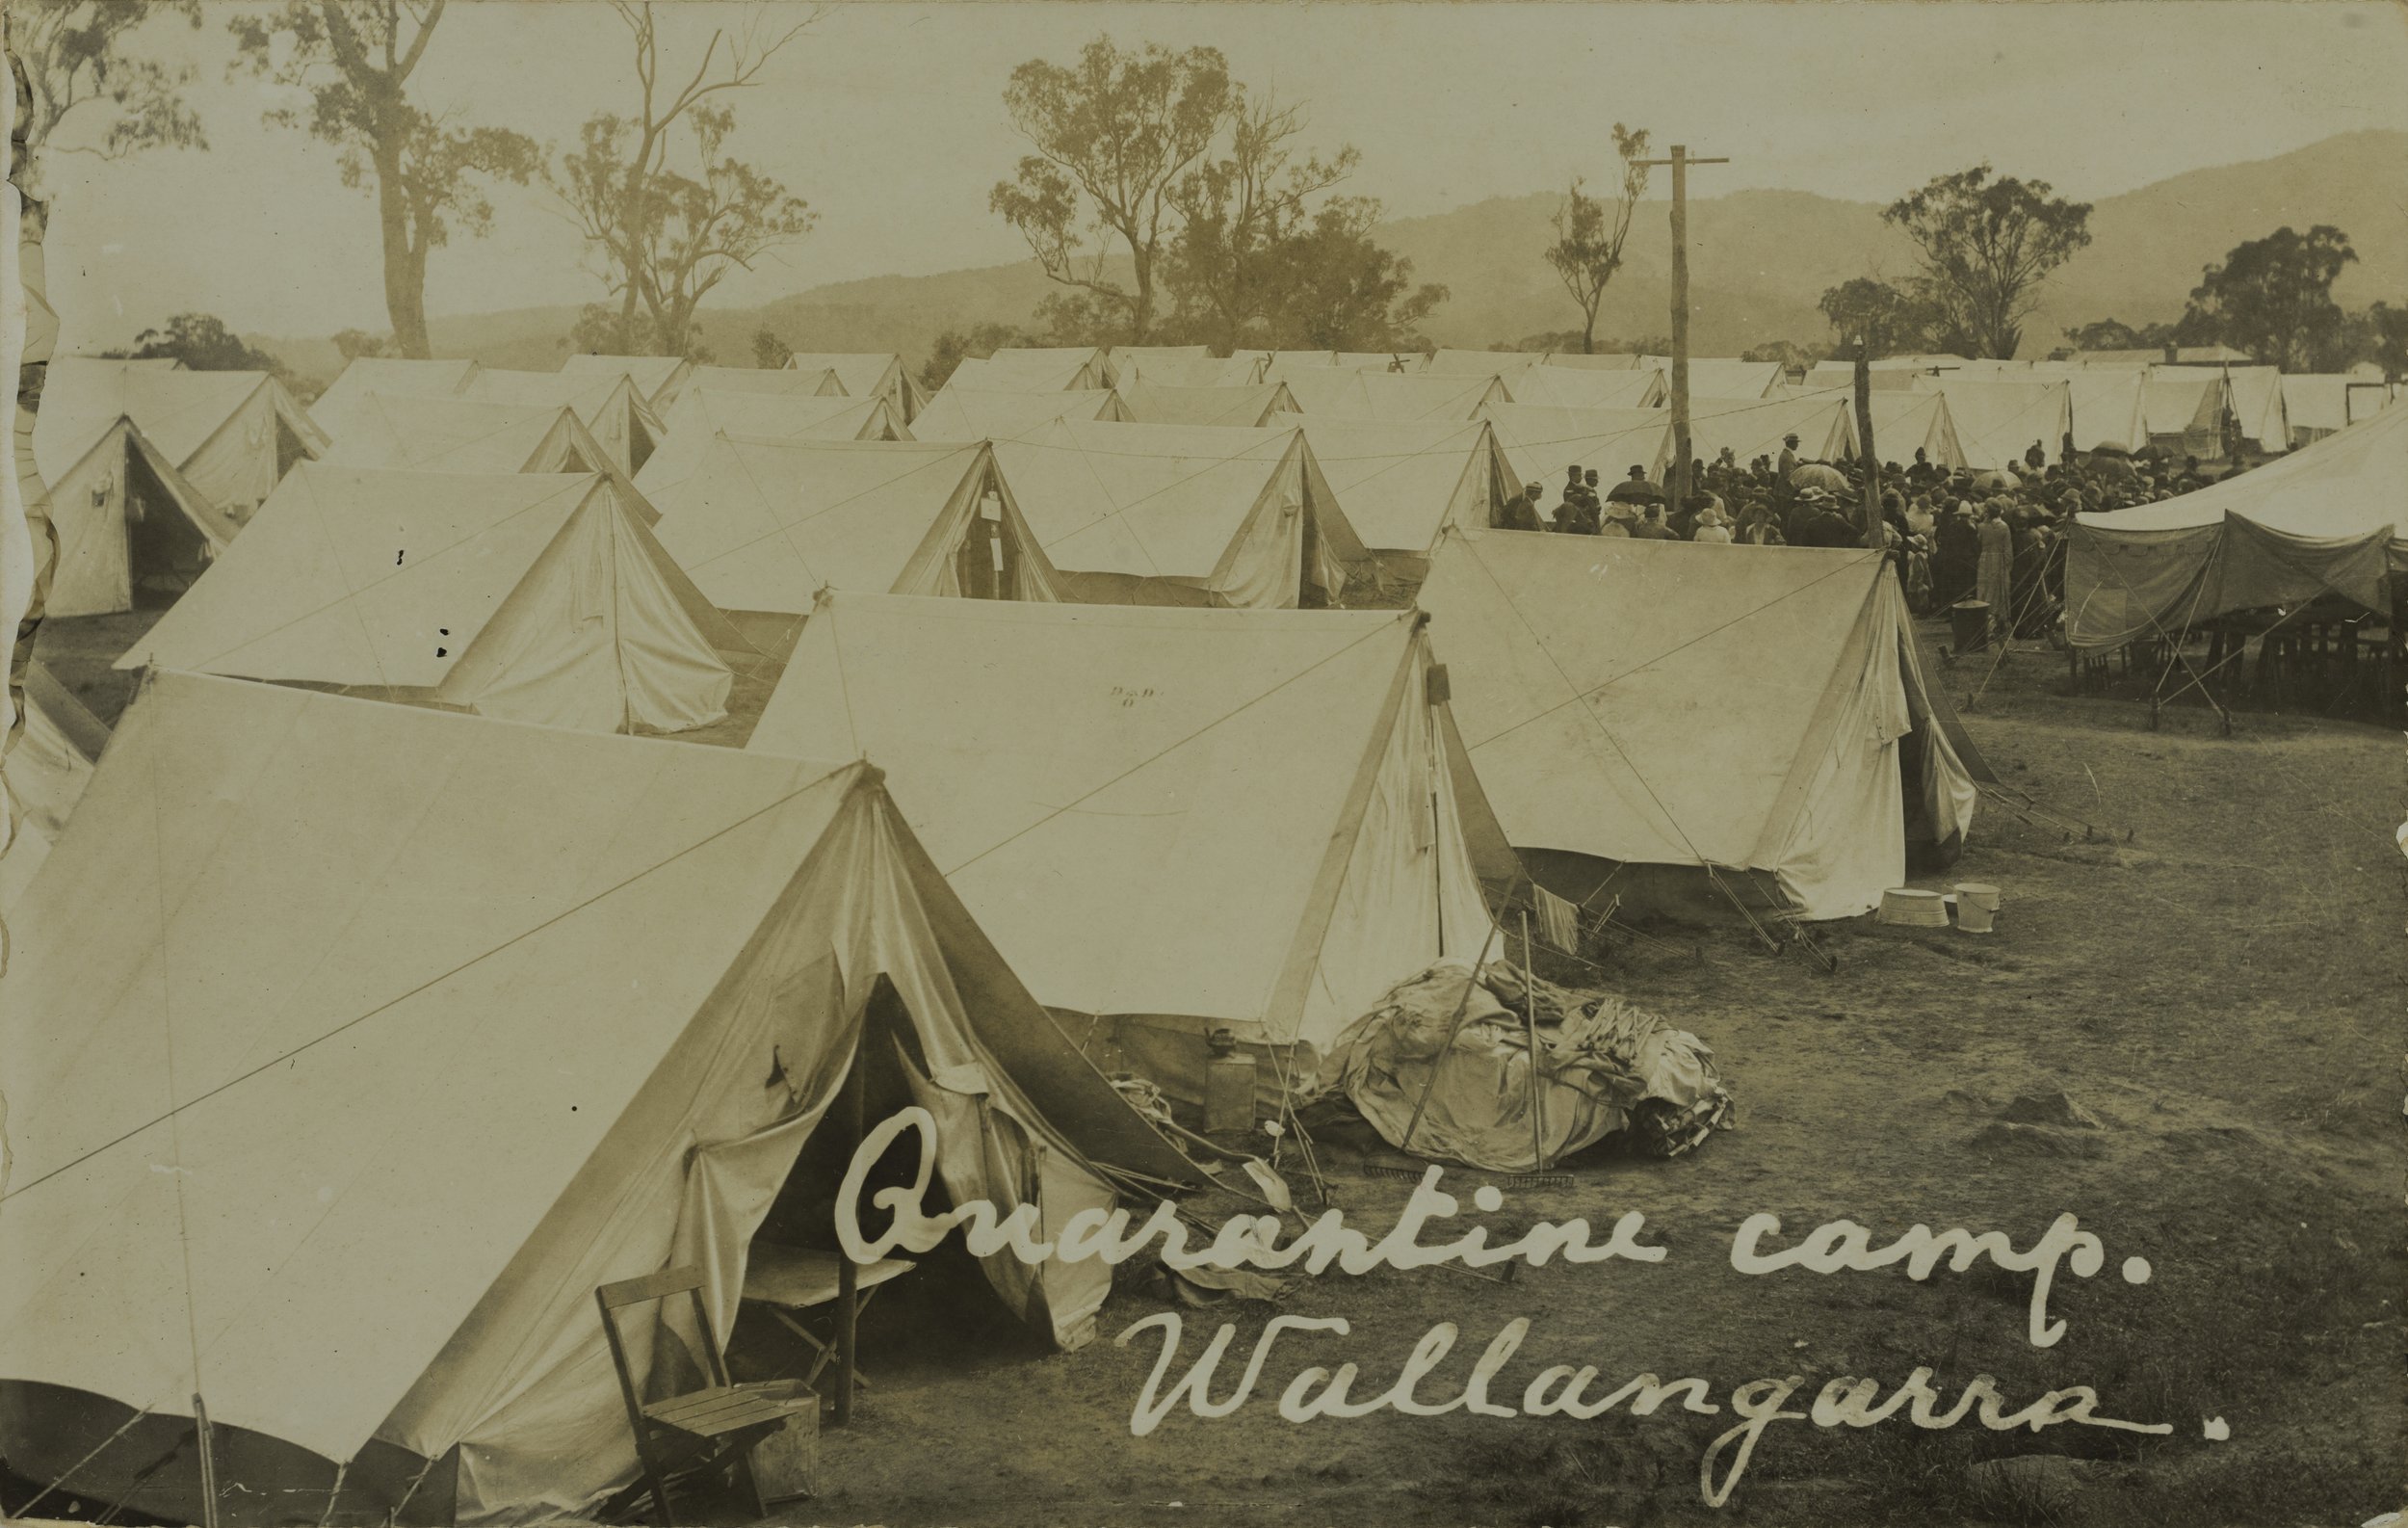 Rows of tents at the Wallangarra Quarantine camp, 1919 SLQ.jpg